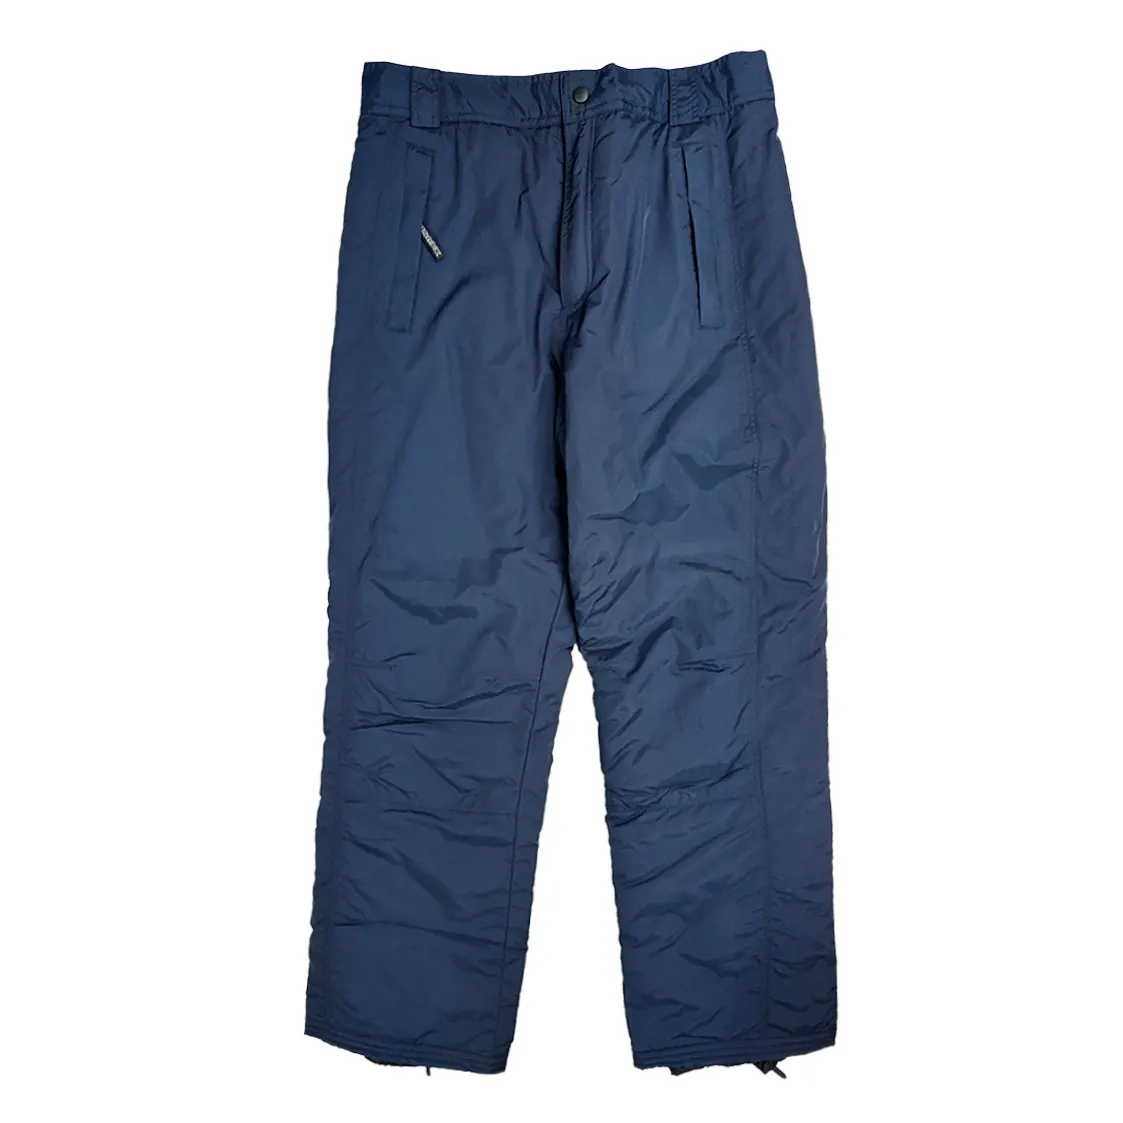 Pantalones de esquí acolchados cálidos de invierno tejidos de nailon para adultos de alta calidad ODM para hombres